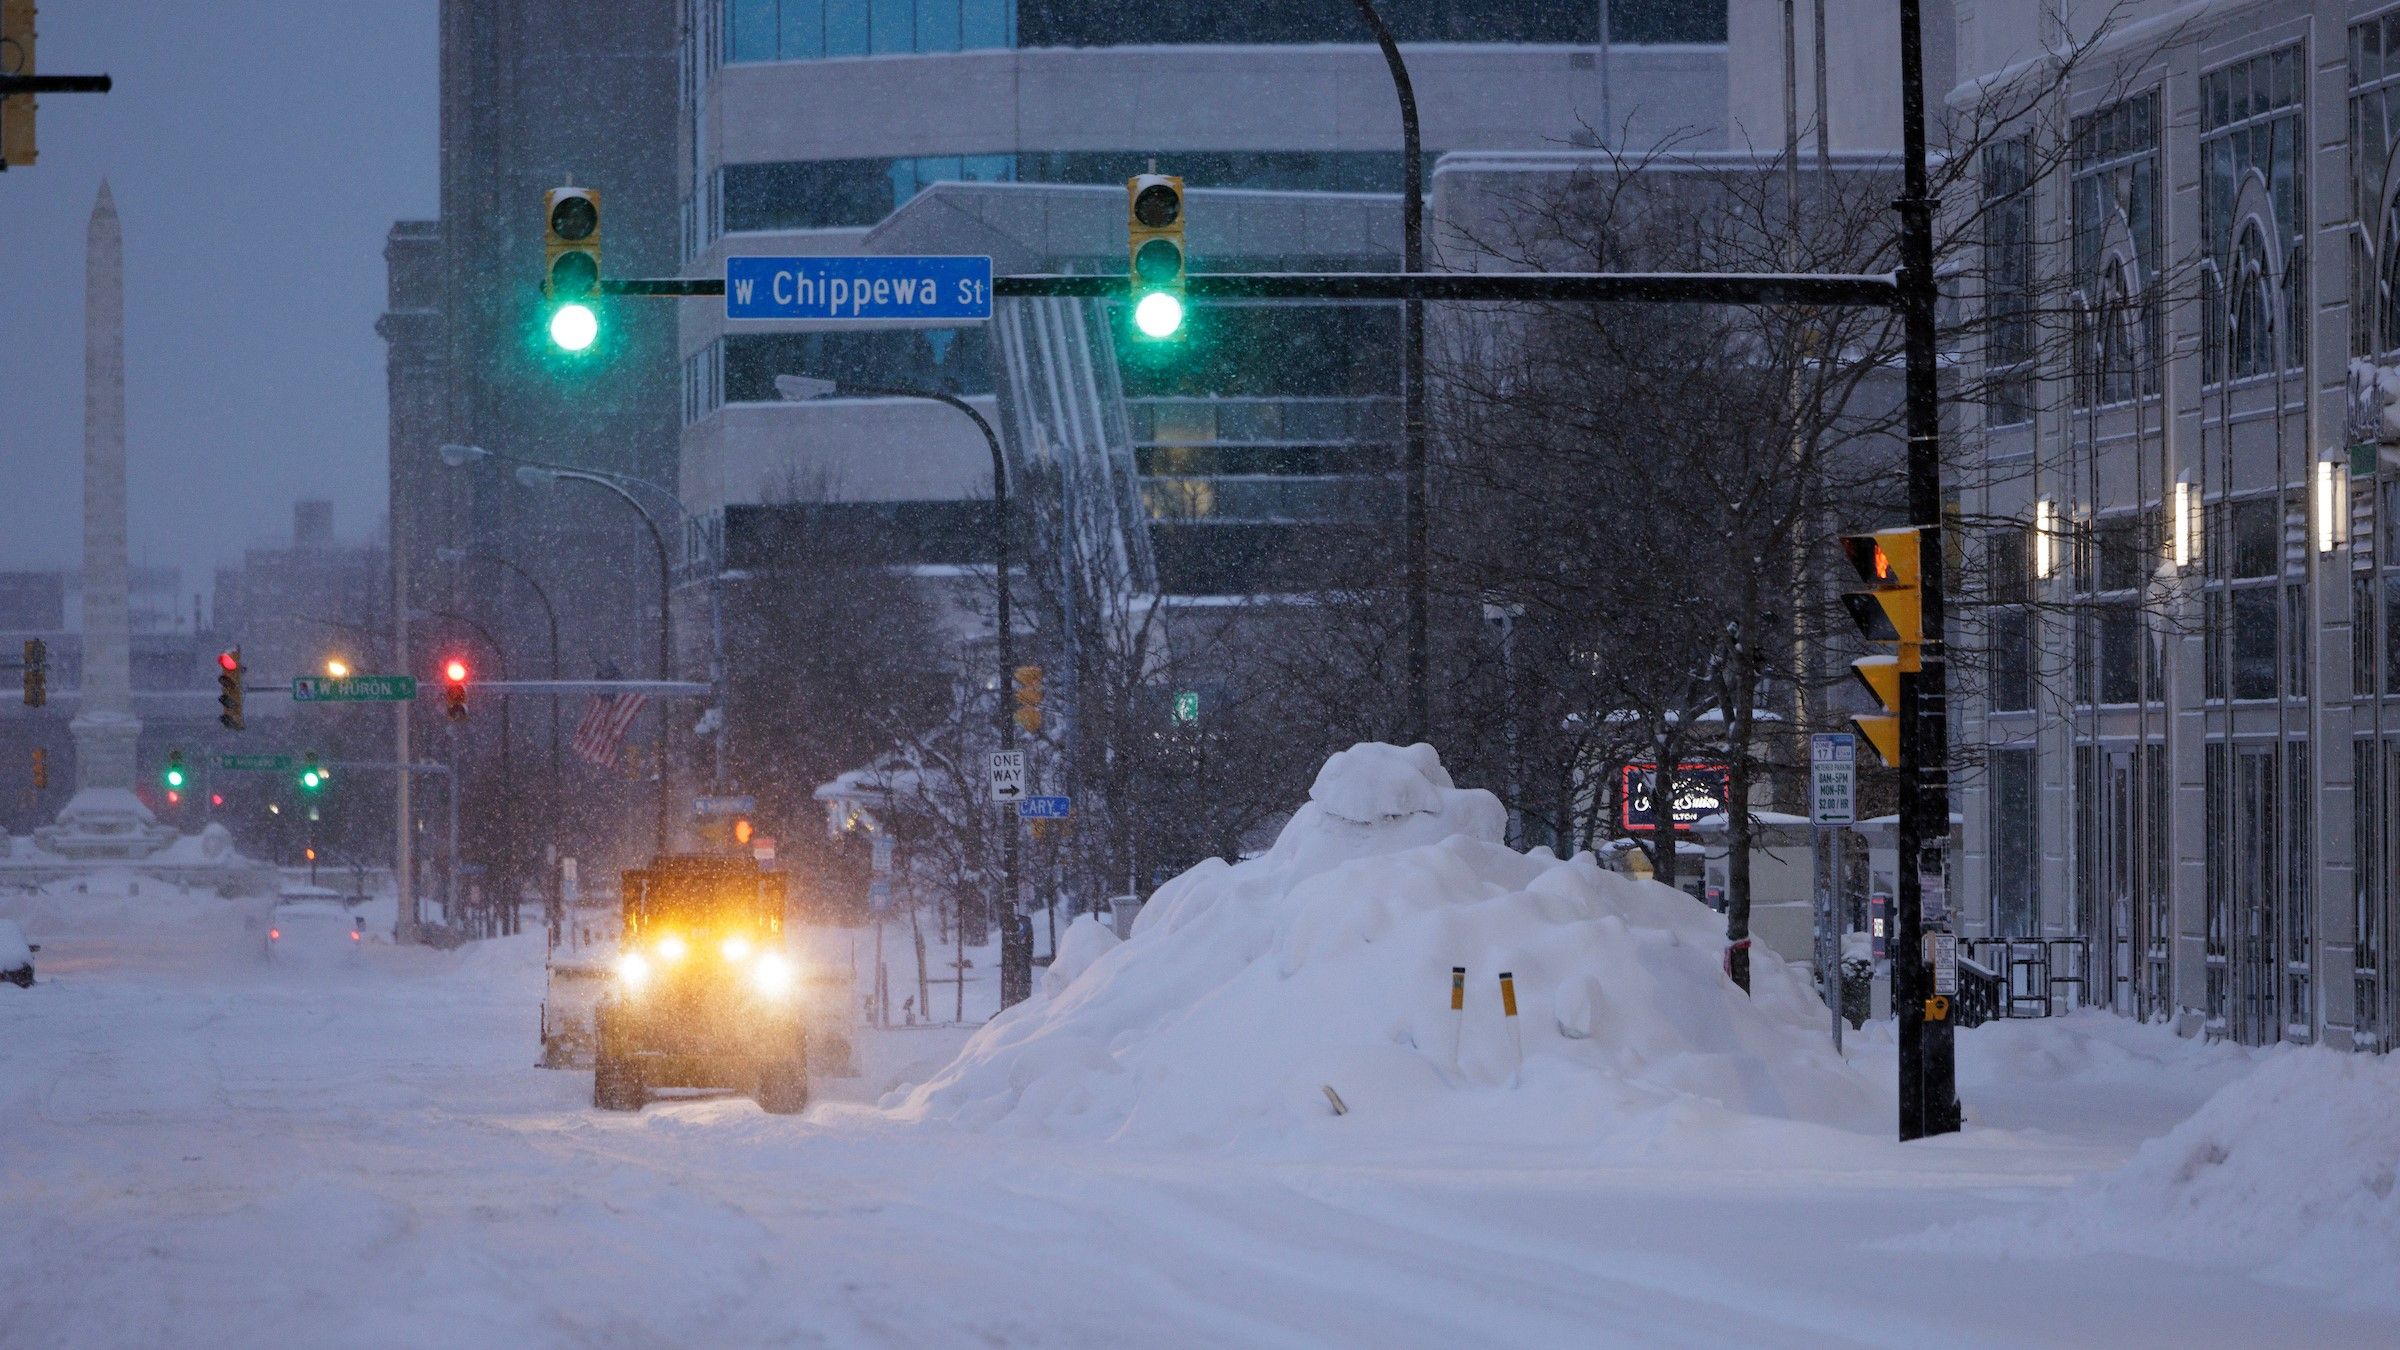 Blizzard kills 60 across US Buffalo - Satya Hindi